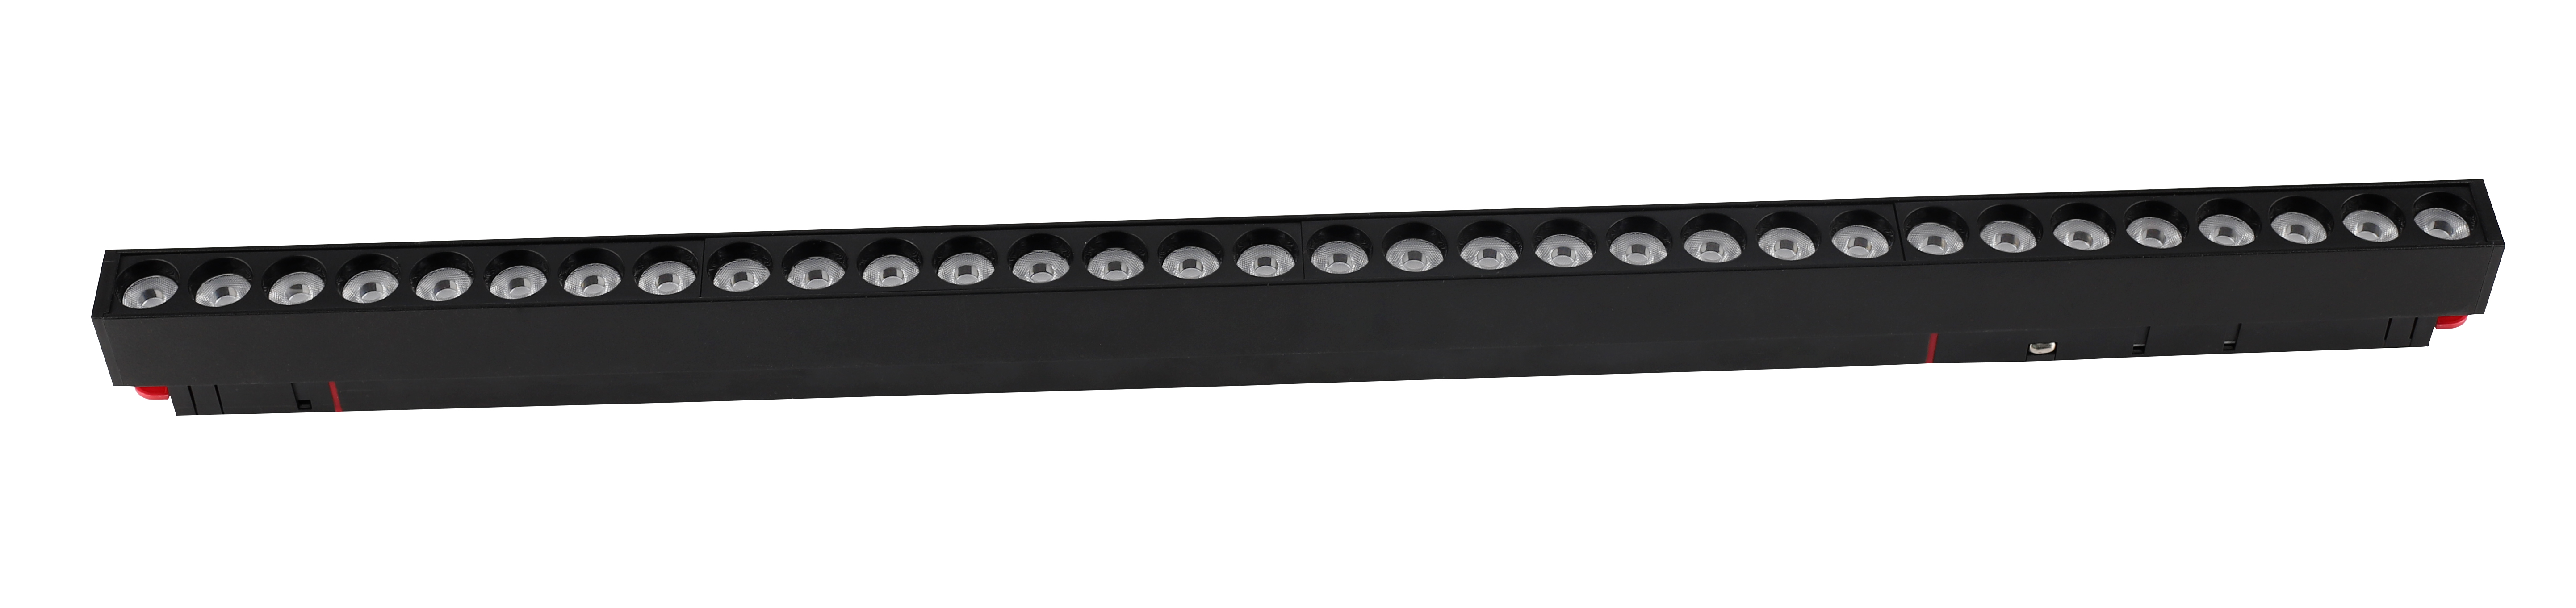 New fashion Adjustable Magnetic Track Light Rail Easy Installation Ceiling Spotlight Fixture